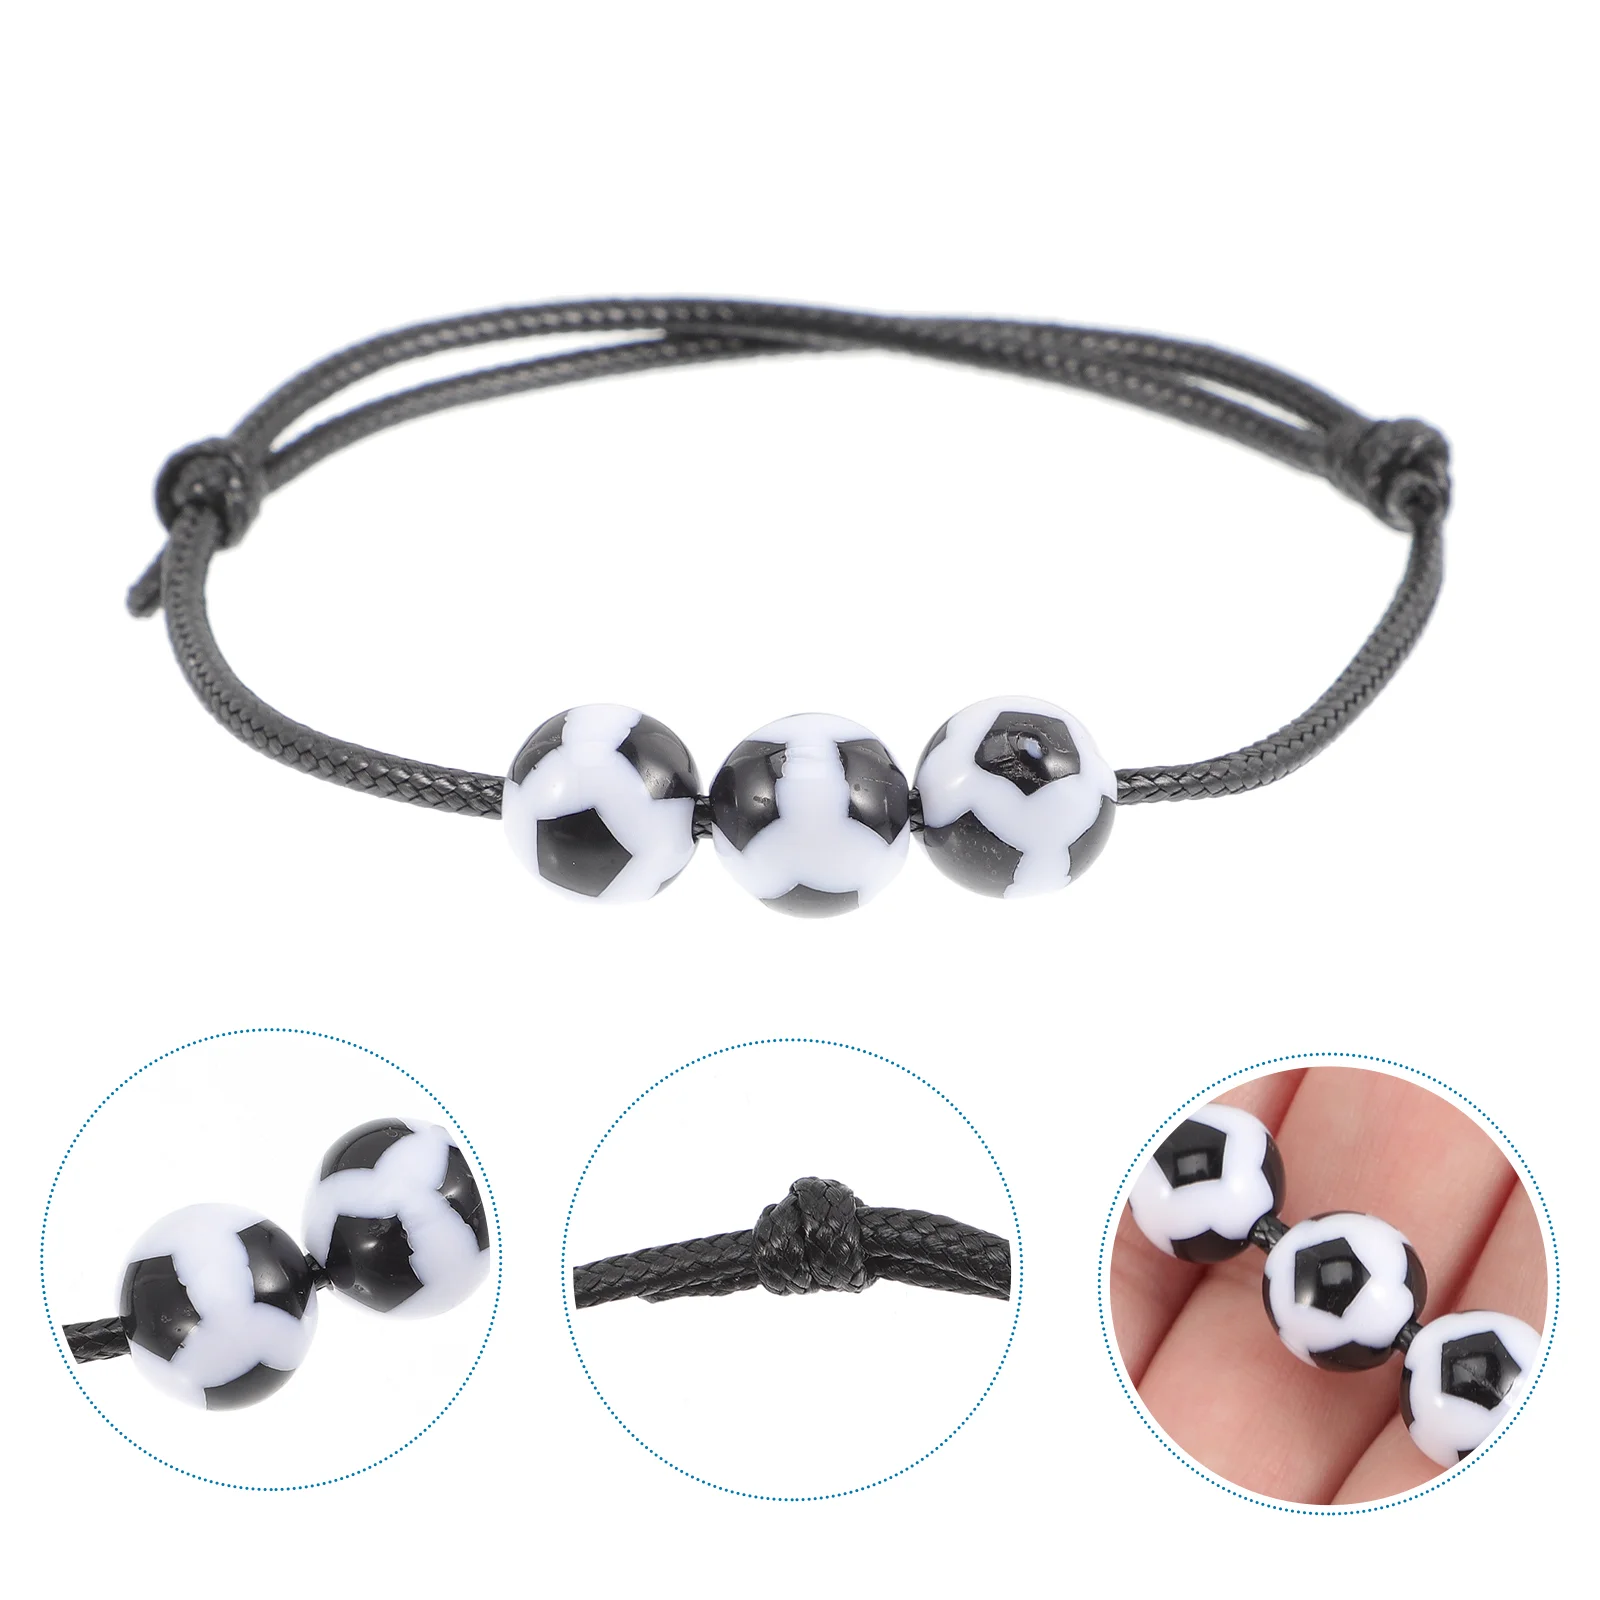 

Bracelet Soccerbraided Jewelry Wrist Chain Woven Braceletsdecorationfavors Charm Accessory Writstband Fans String Friendship